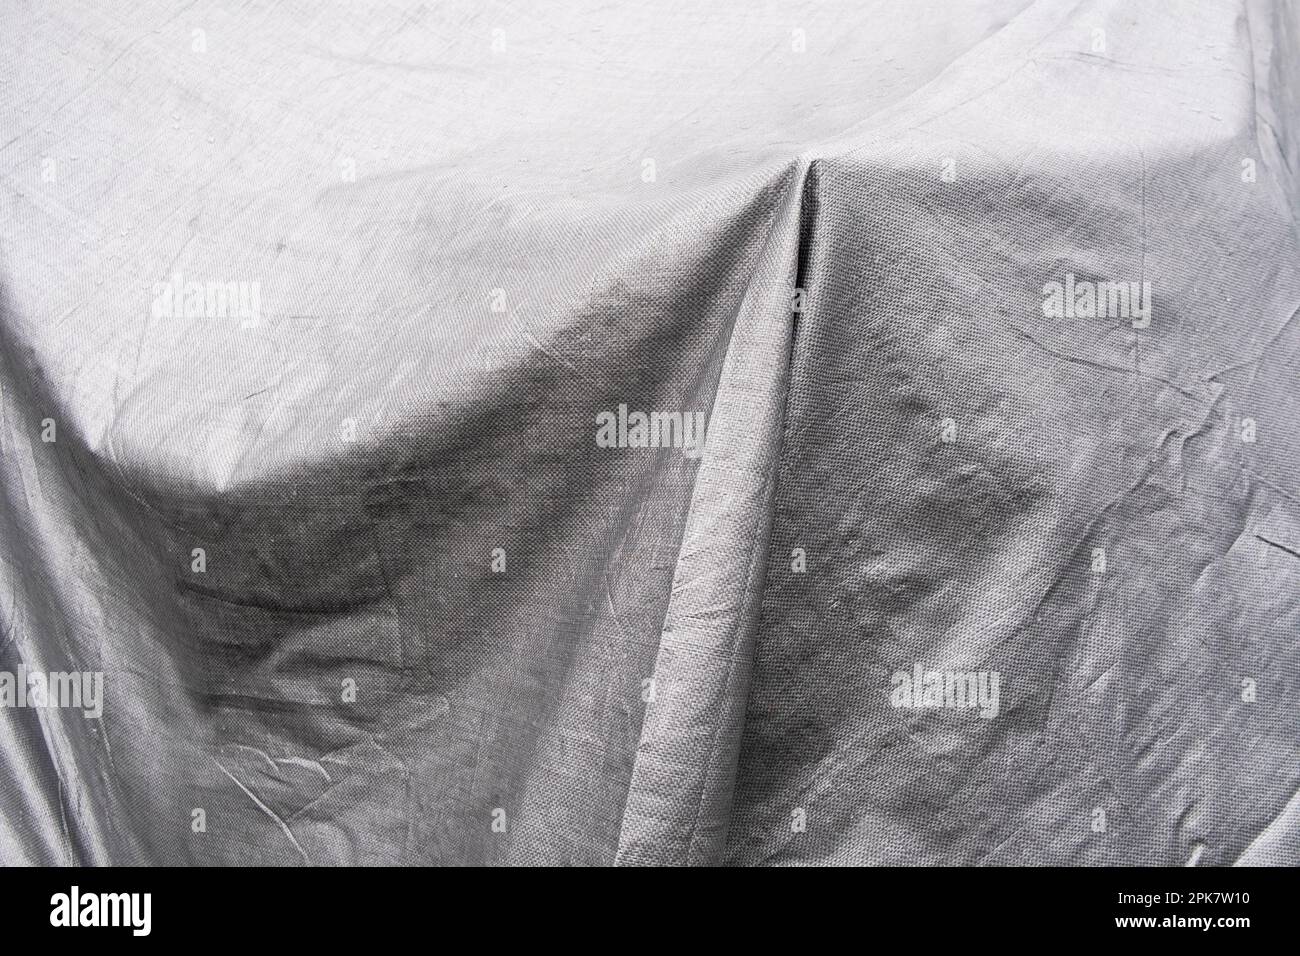 Black and white image, folds of tarpaulin draped across objects. Stock Photo